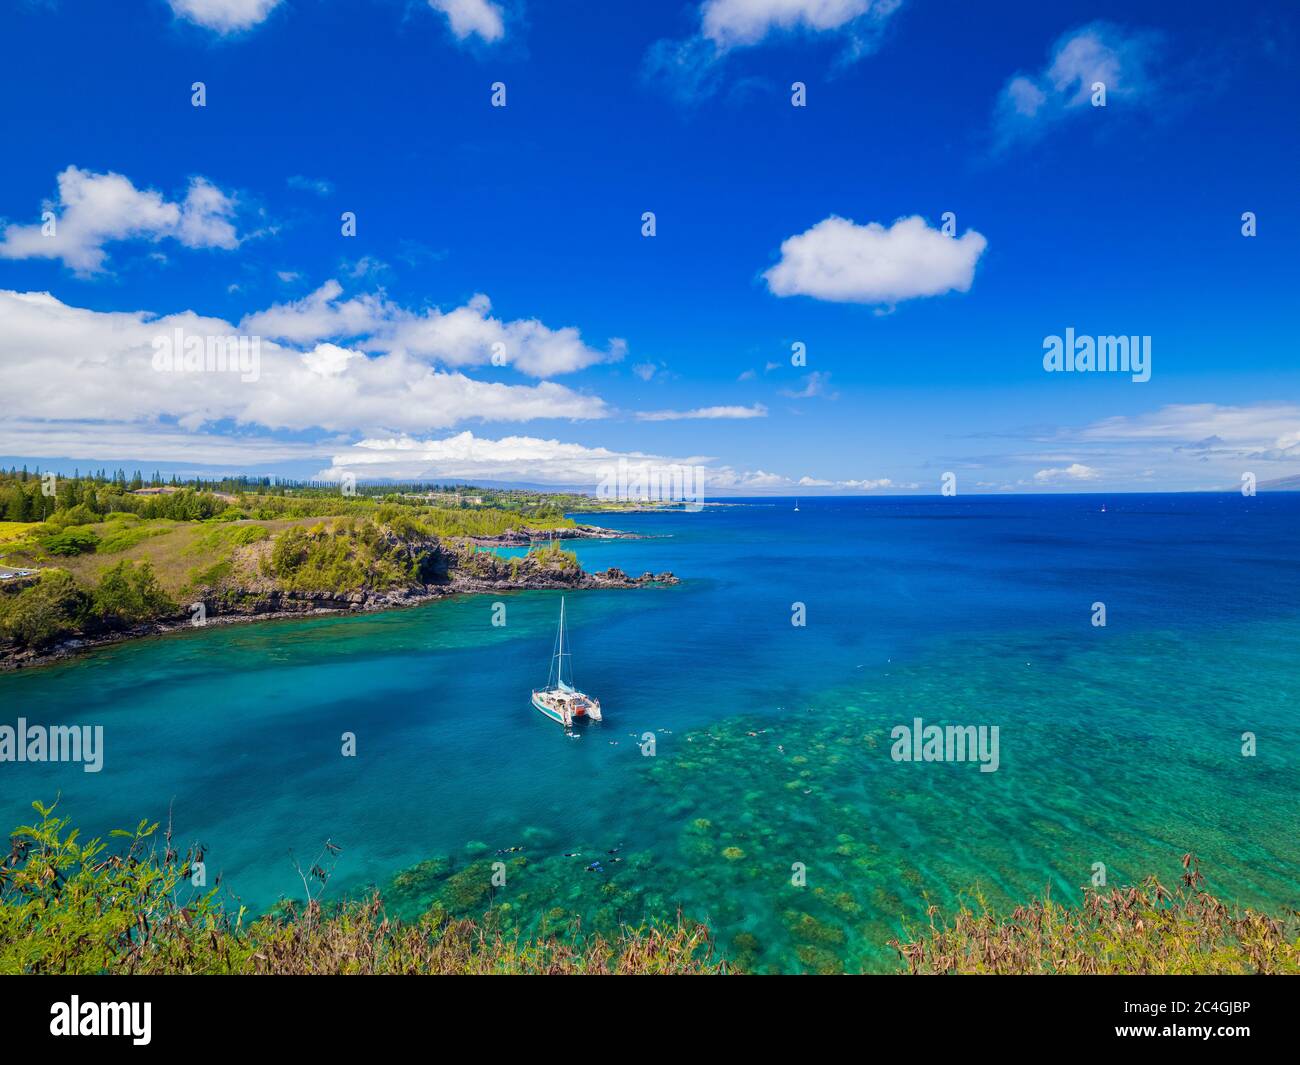 Landscape of Honolua Bay Maui Hawaii Snorkeling coral reefs in marine preserve Stock Photo